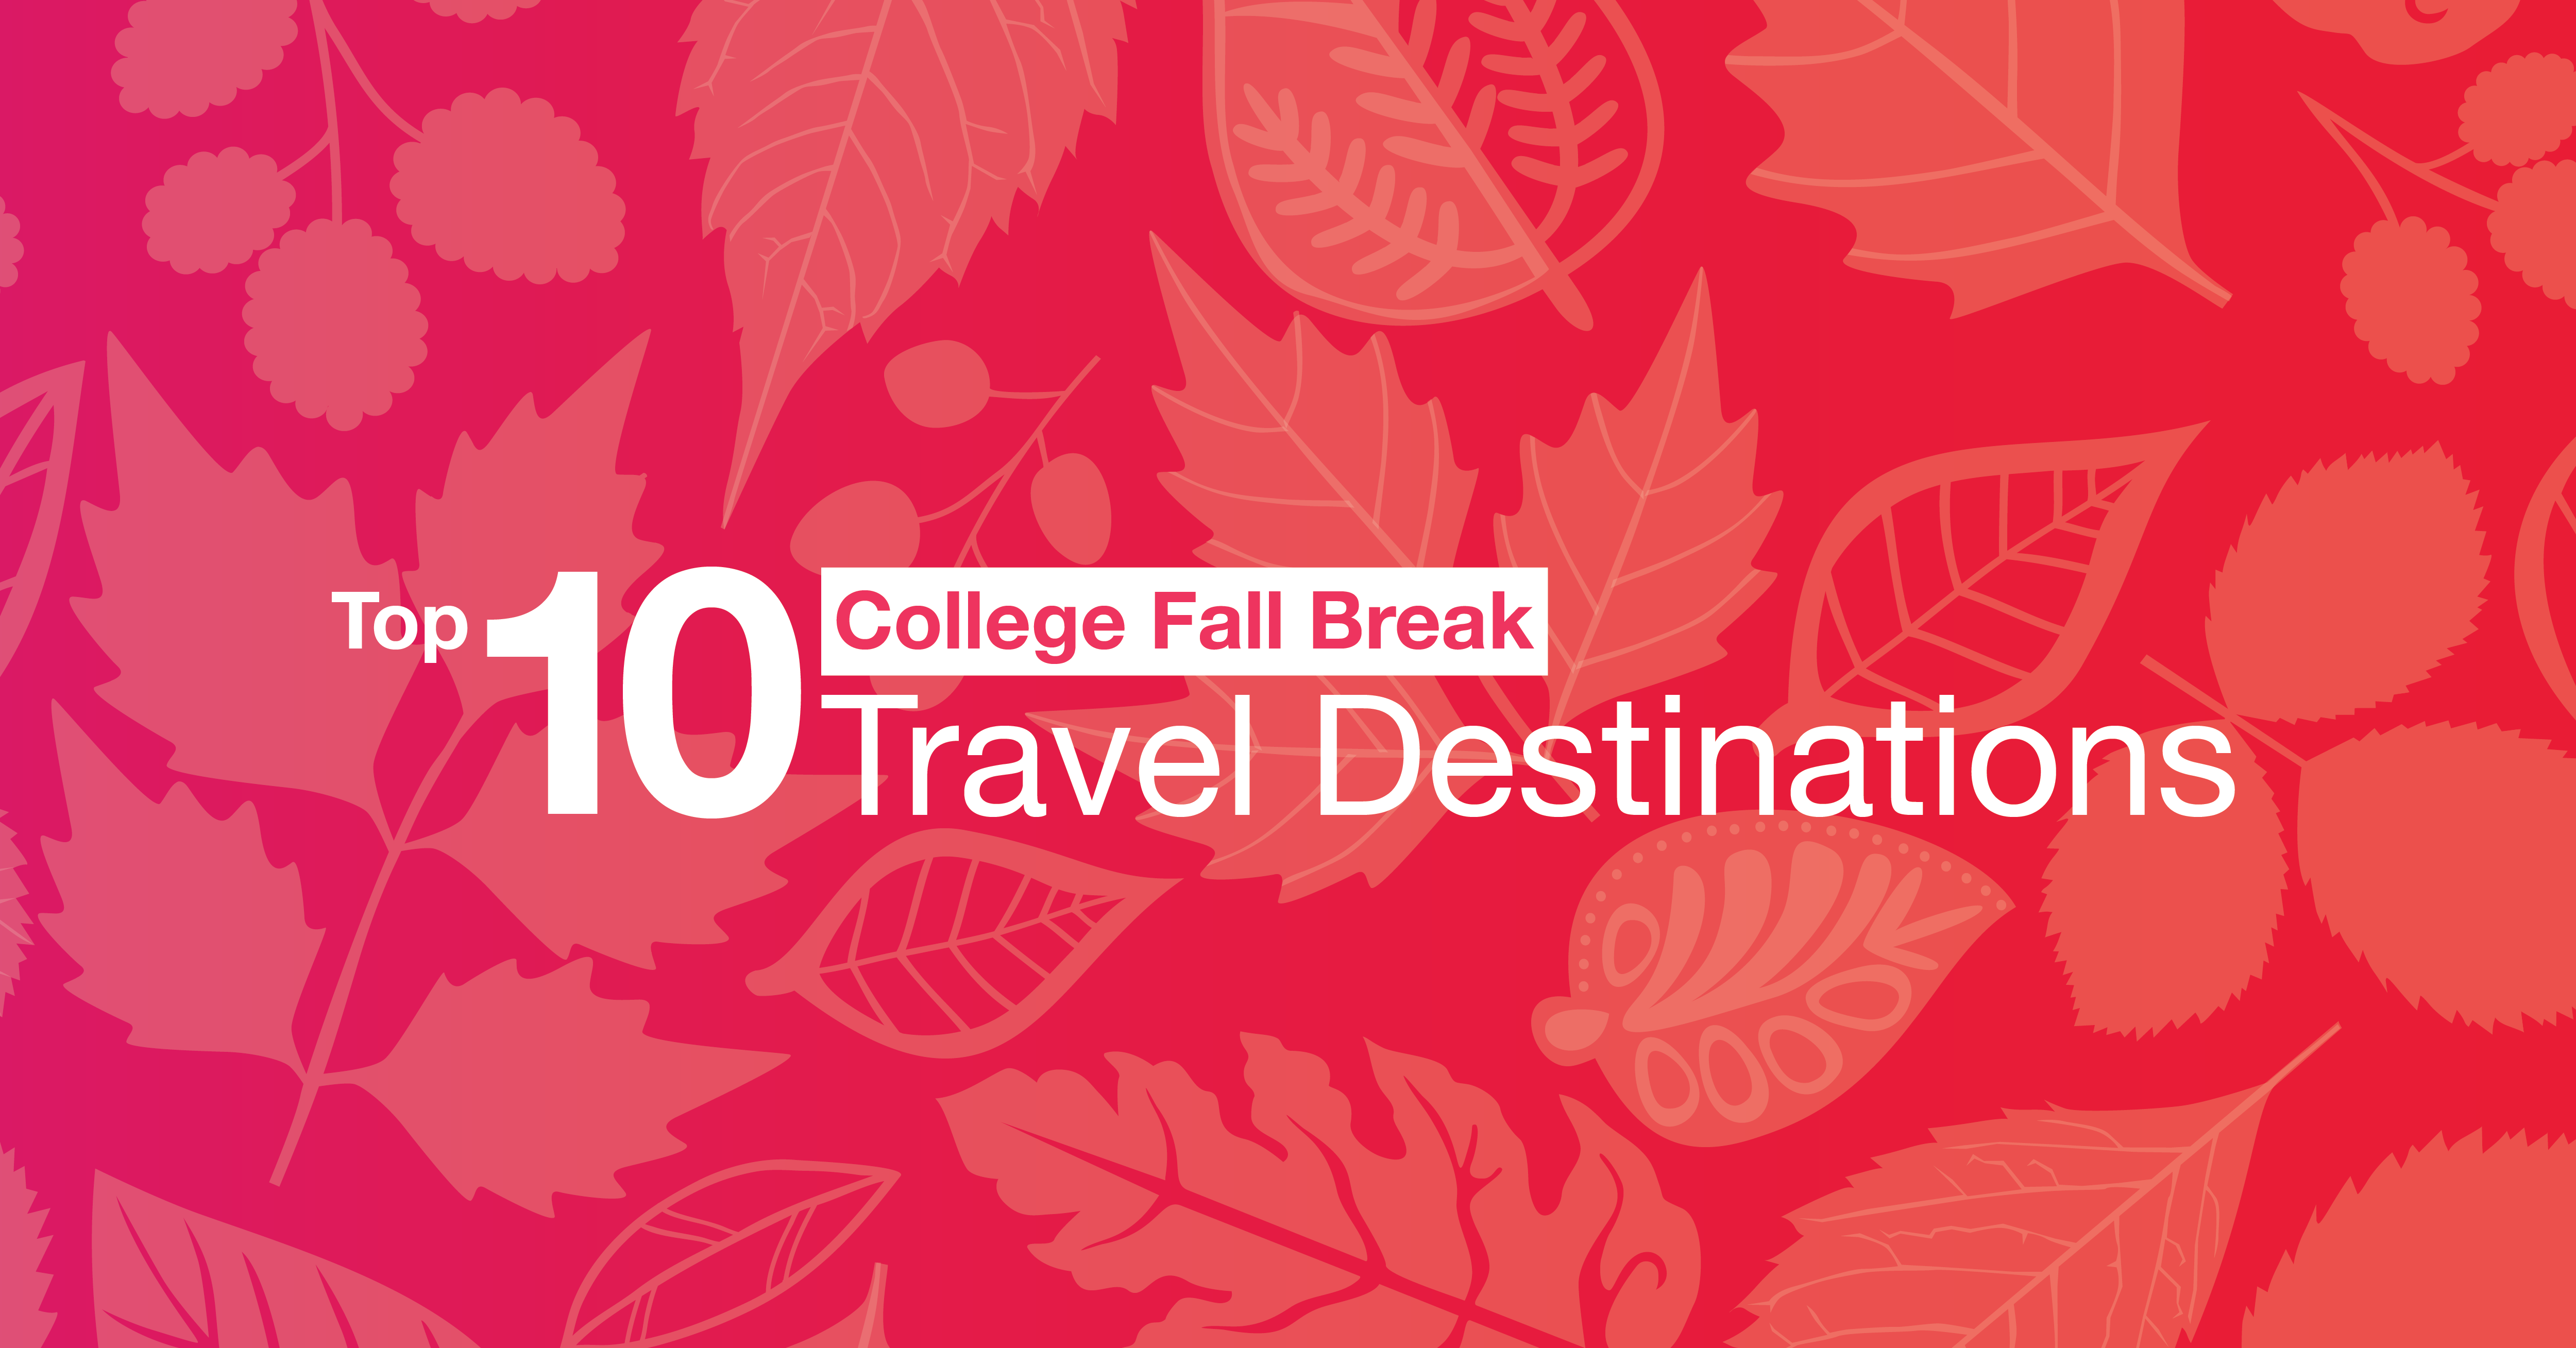 Top 10 College Fall Break Travel Destinations